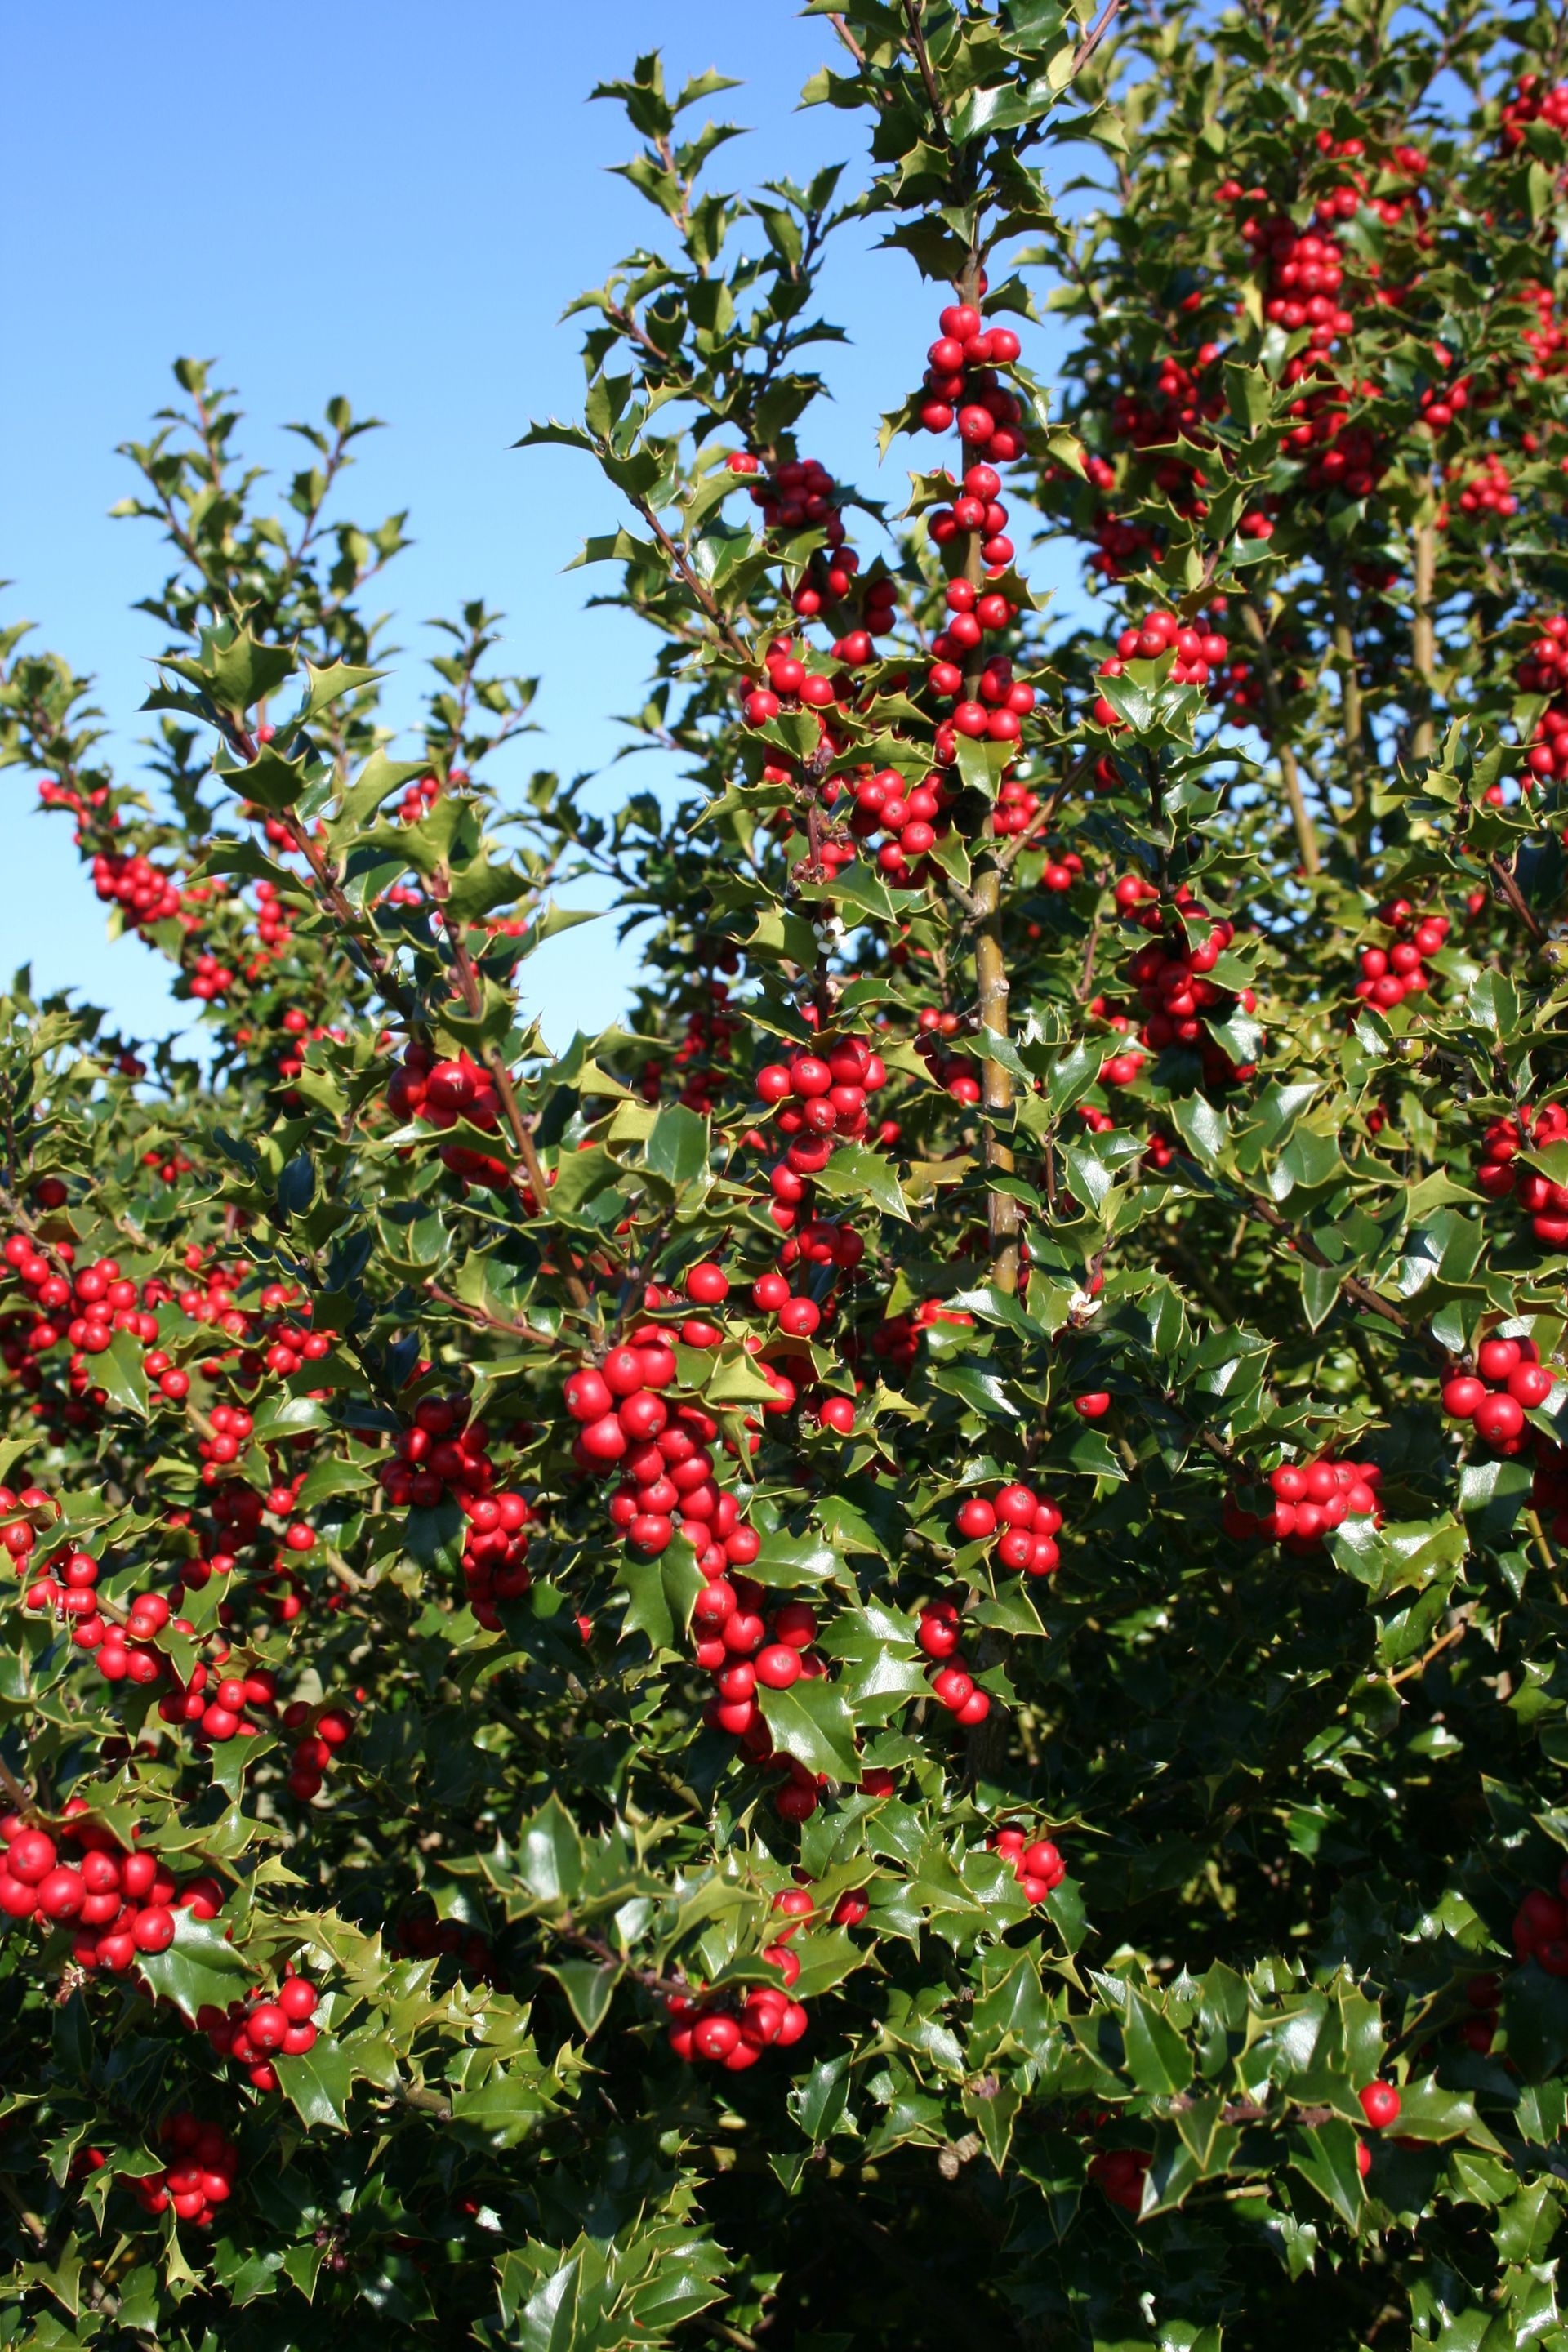 Ilex Red Beauty Holly shrub evergreen bush for sale in Lebanon